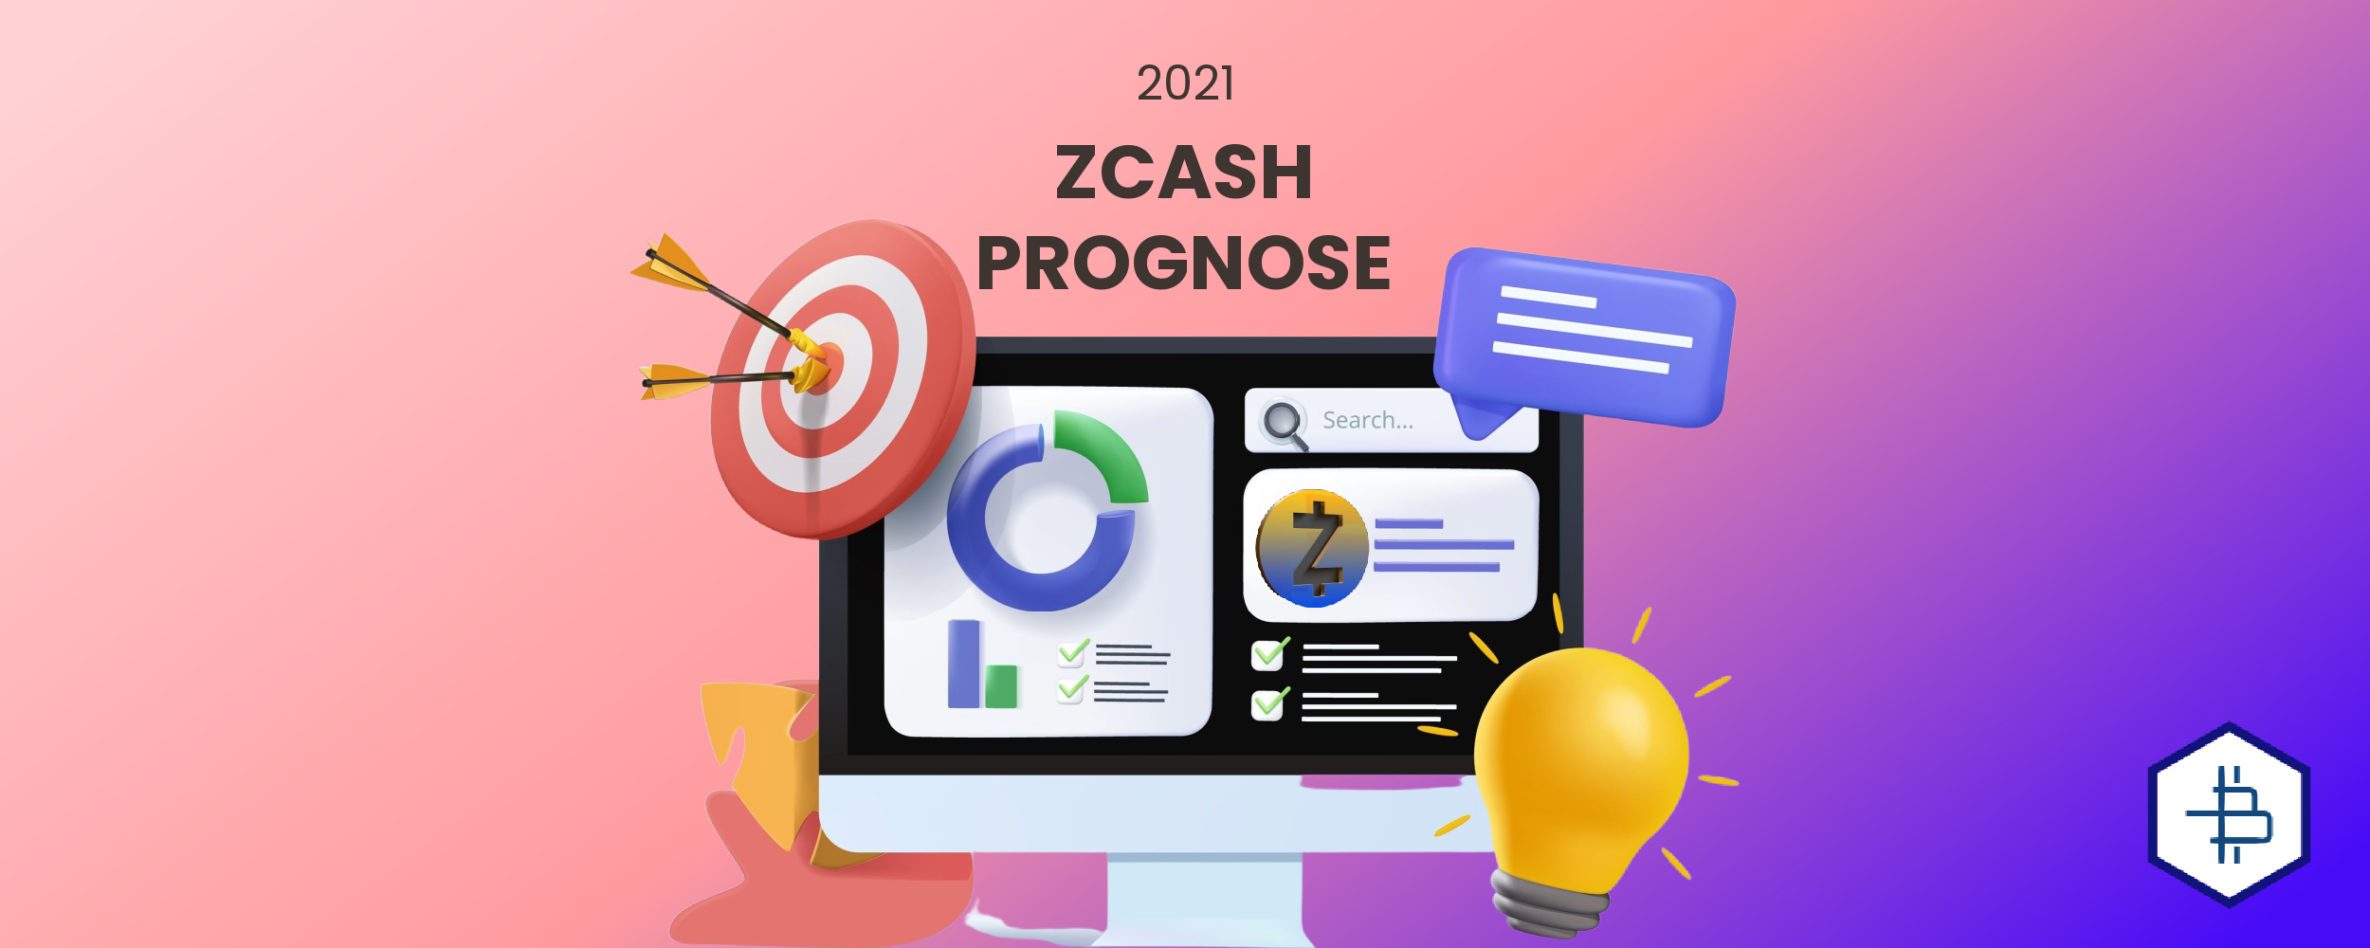 ZCash Prognose 2021